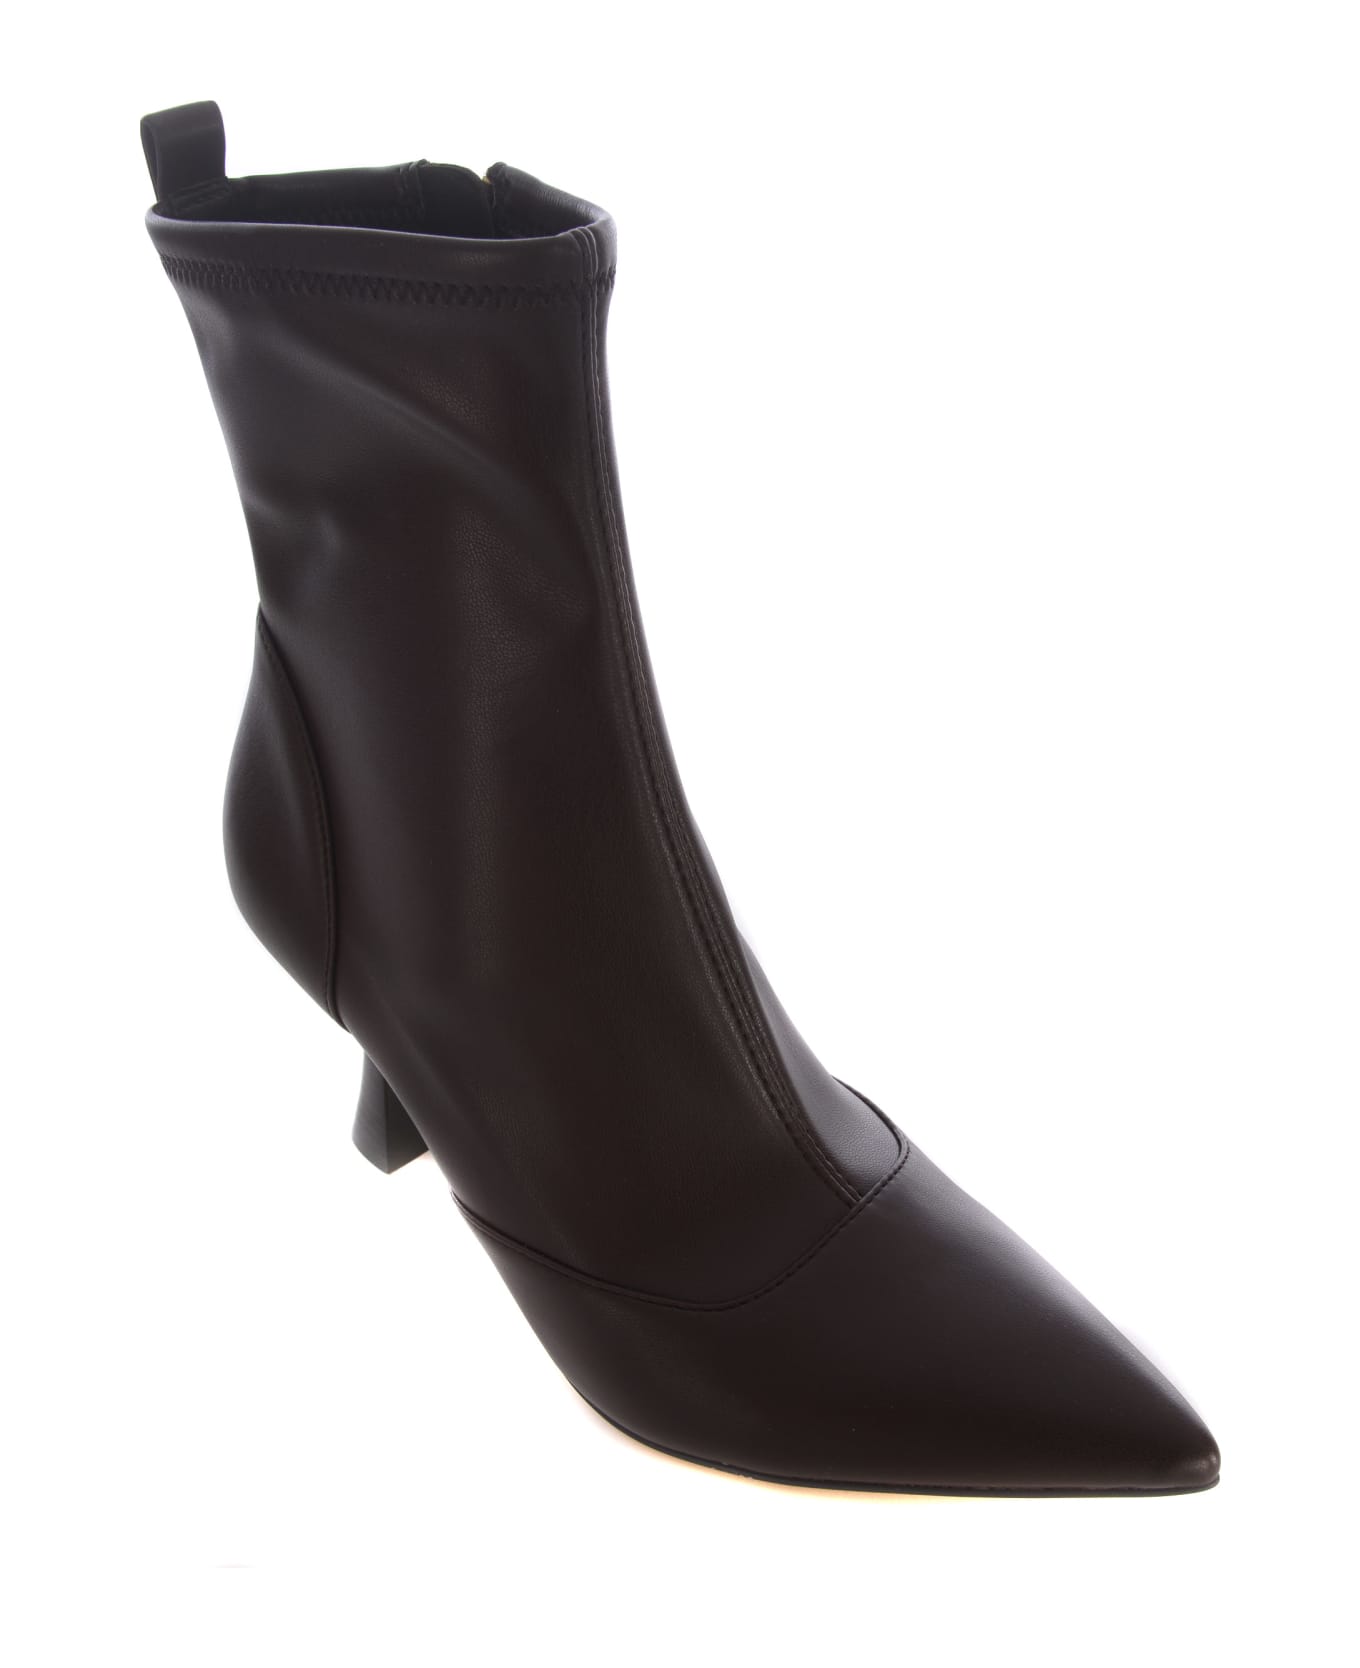 Michael Kors Ankle Boots "clara" - Marrone